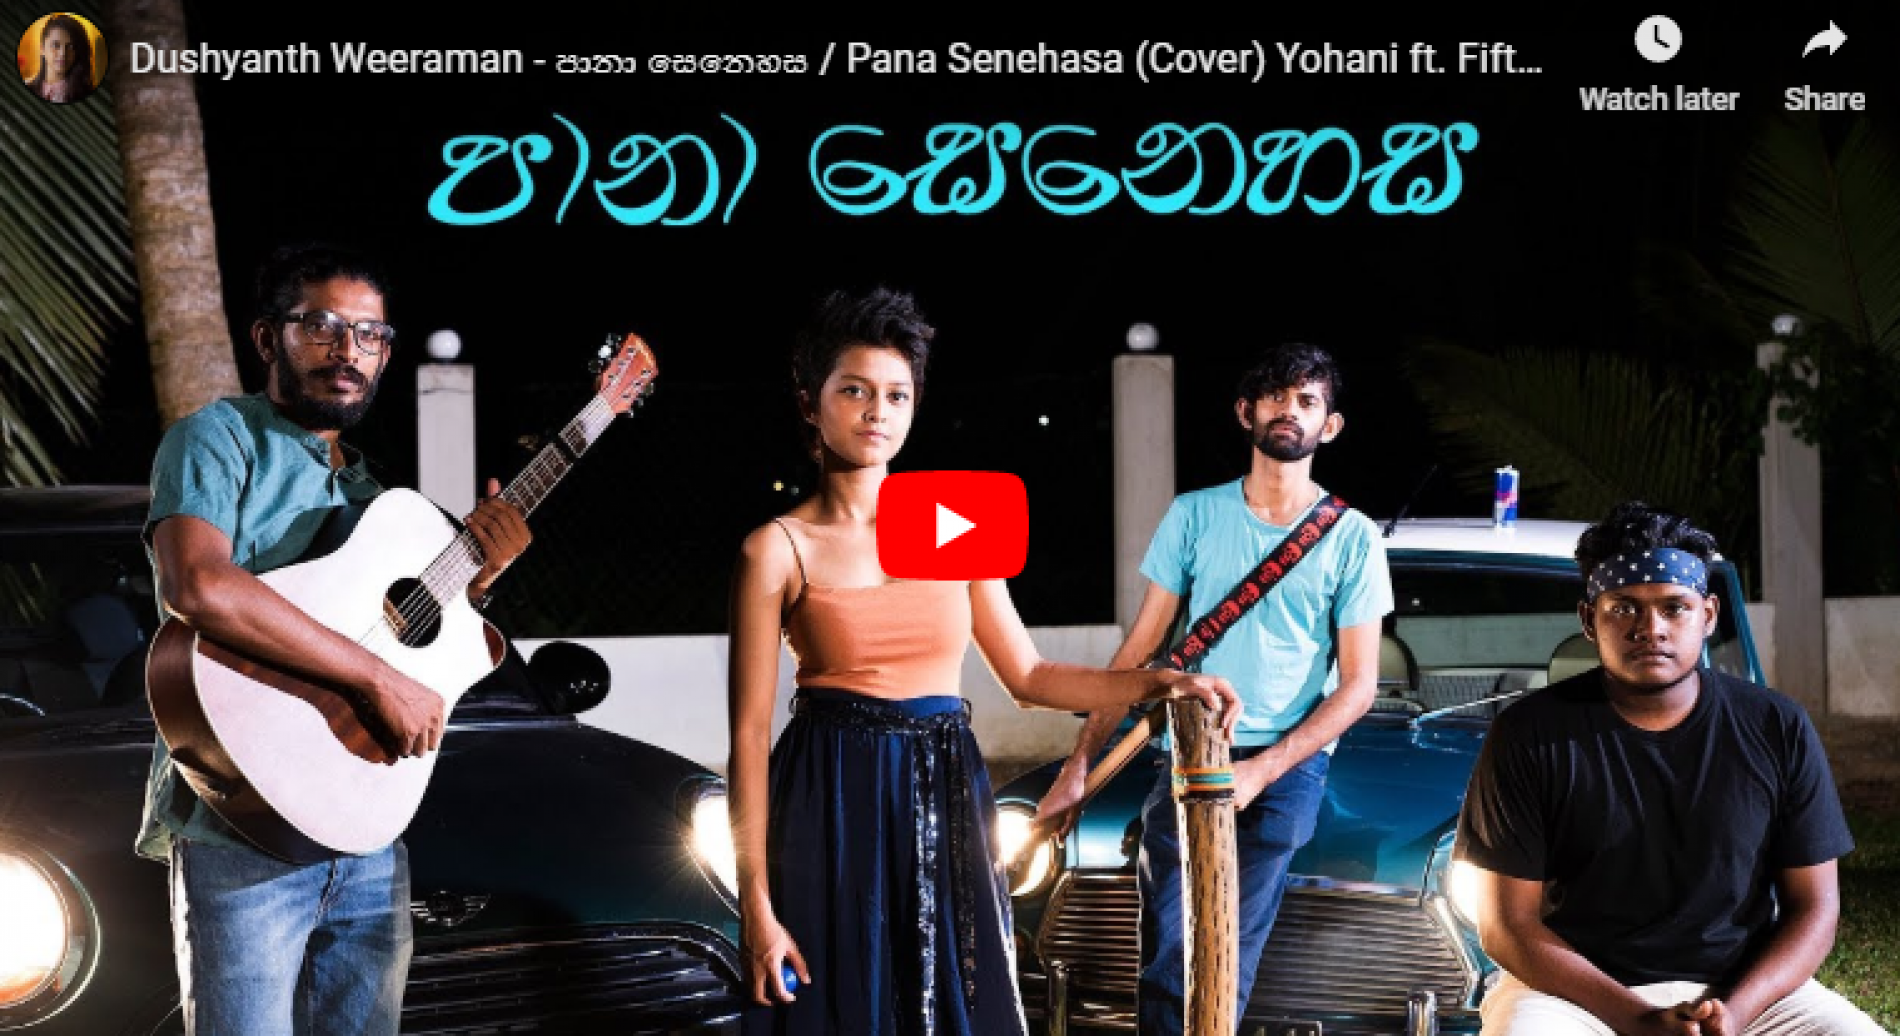 Dushyanth Weeraman – පානා සෙනෙහස / Pana Senehasa (Cover) Yohani ft Fifteenth March